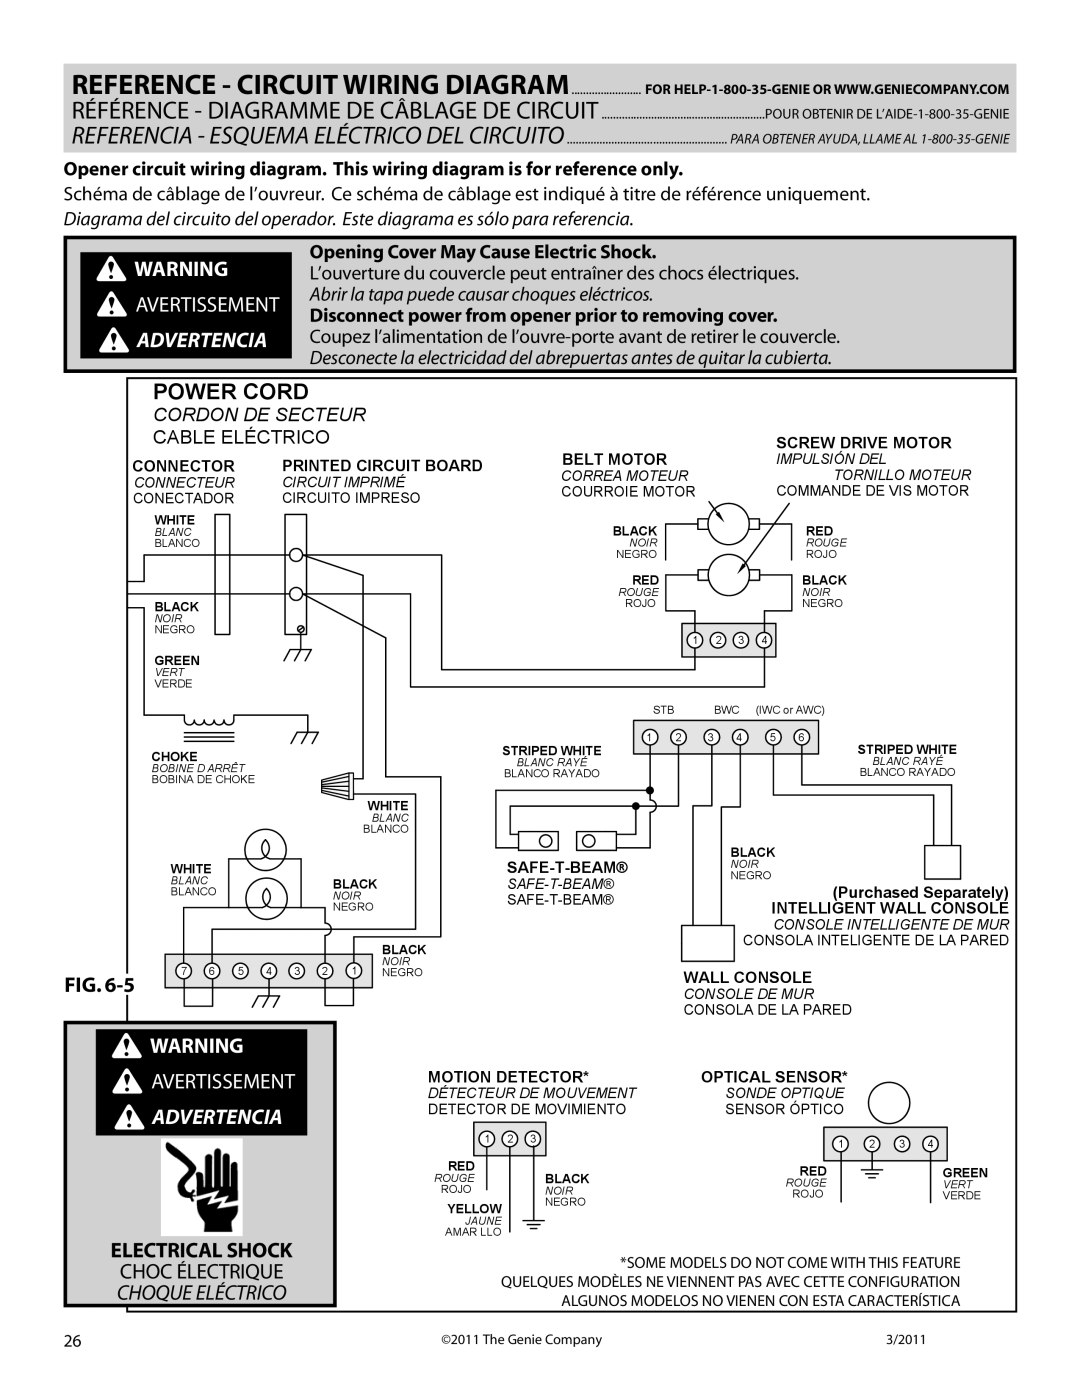 Genie 4042 Reference - Circuit Wiring Diagram, Power Cord, Avertissement, Electrical Shock, Advertencia, Cordon De Secteur 